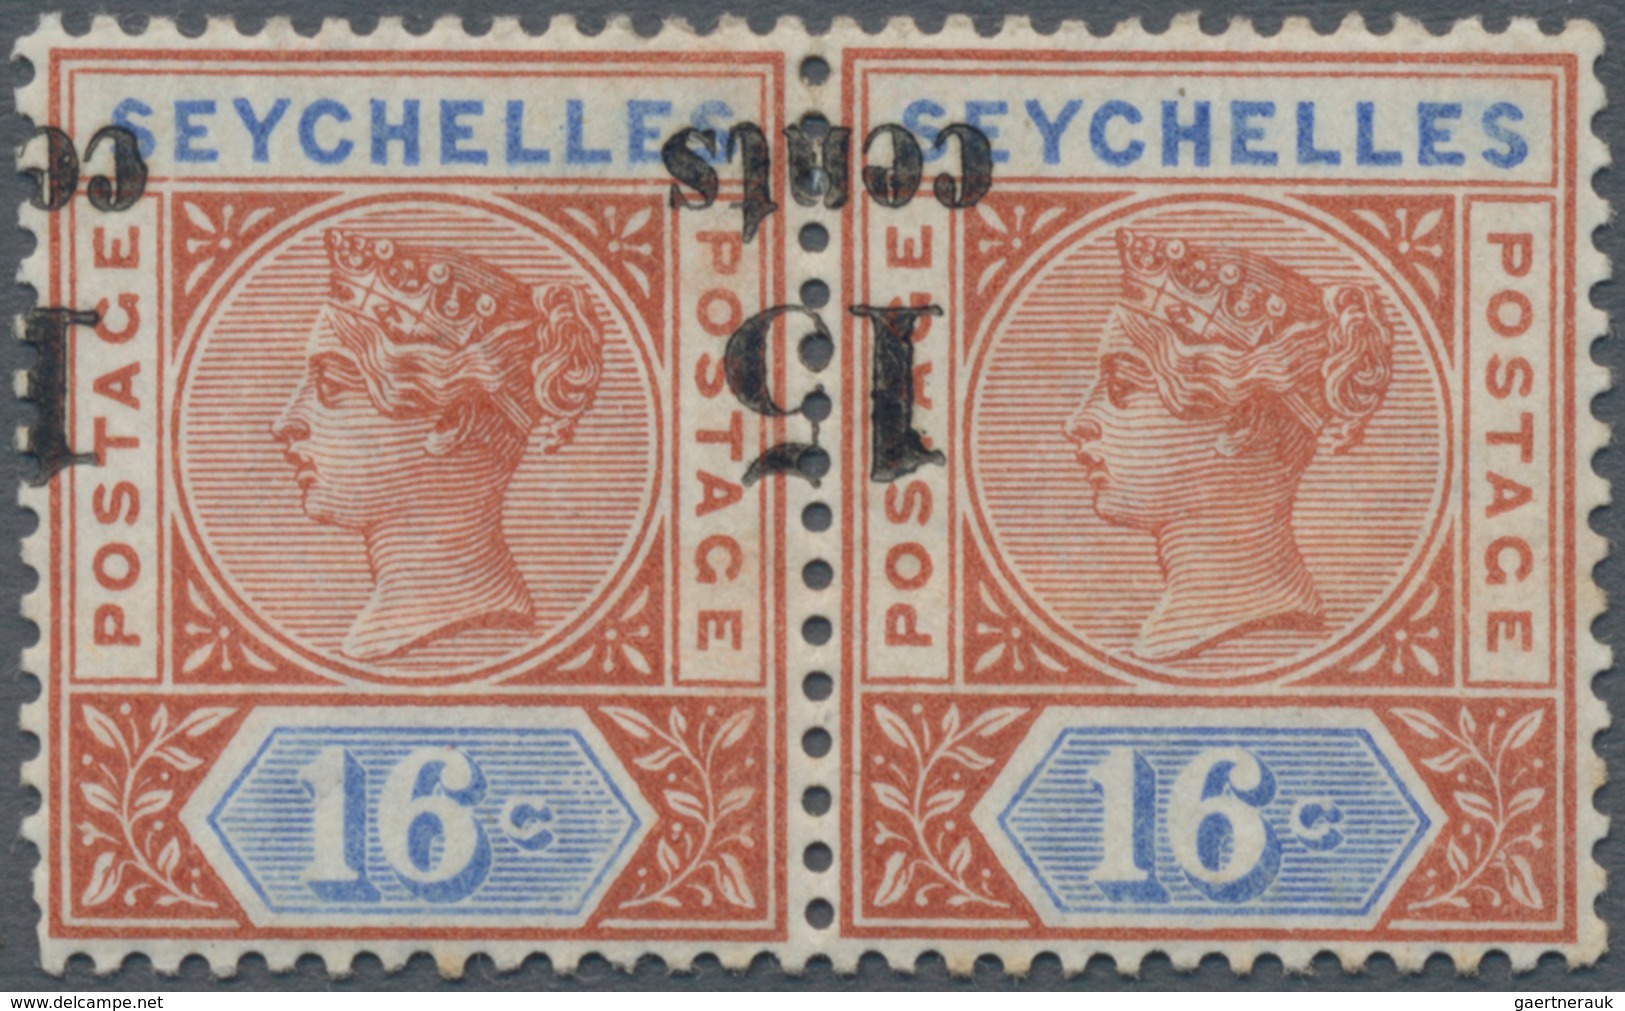 Seychellen: 1893 QV 15c. On 16c. Chestnut & Blue Horizontal Pair, Variety "OVERPRINT INVERTED & SHIF - Seychelles (...-1976)